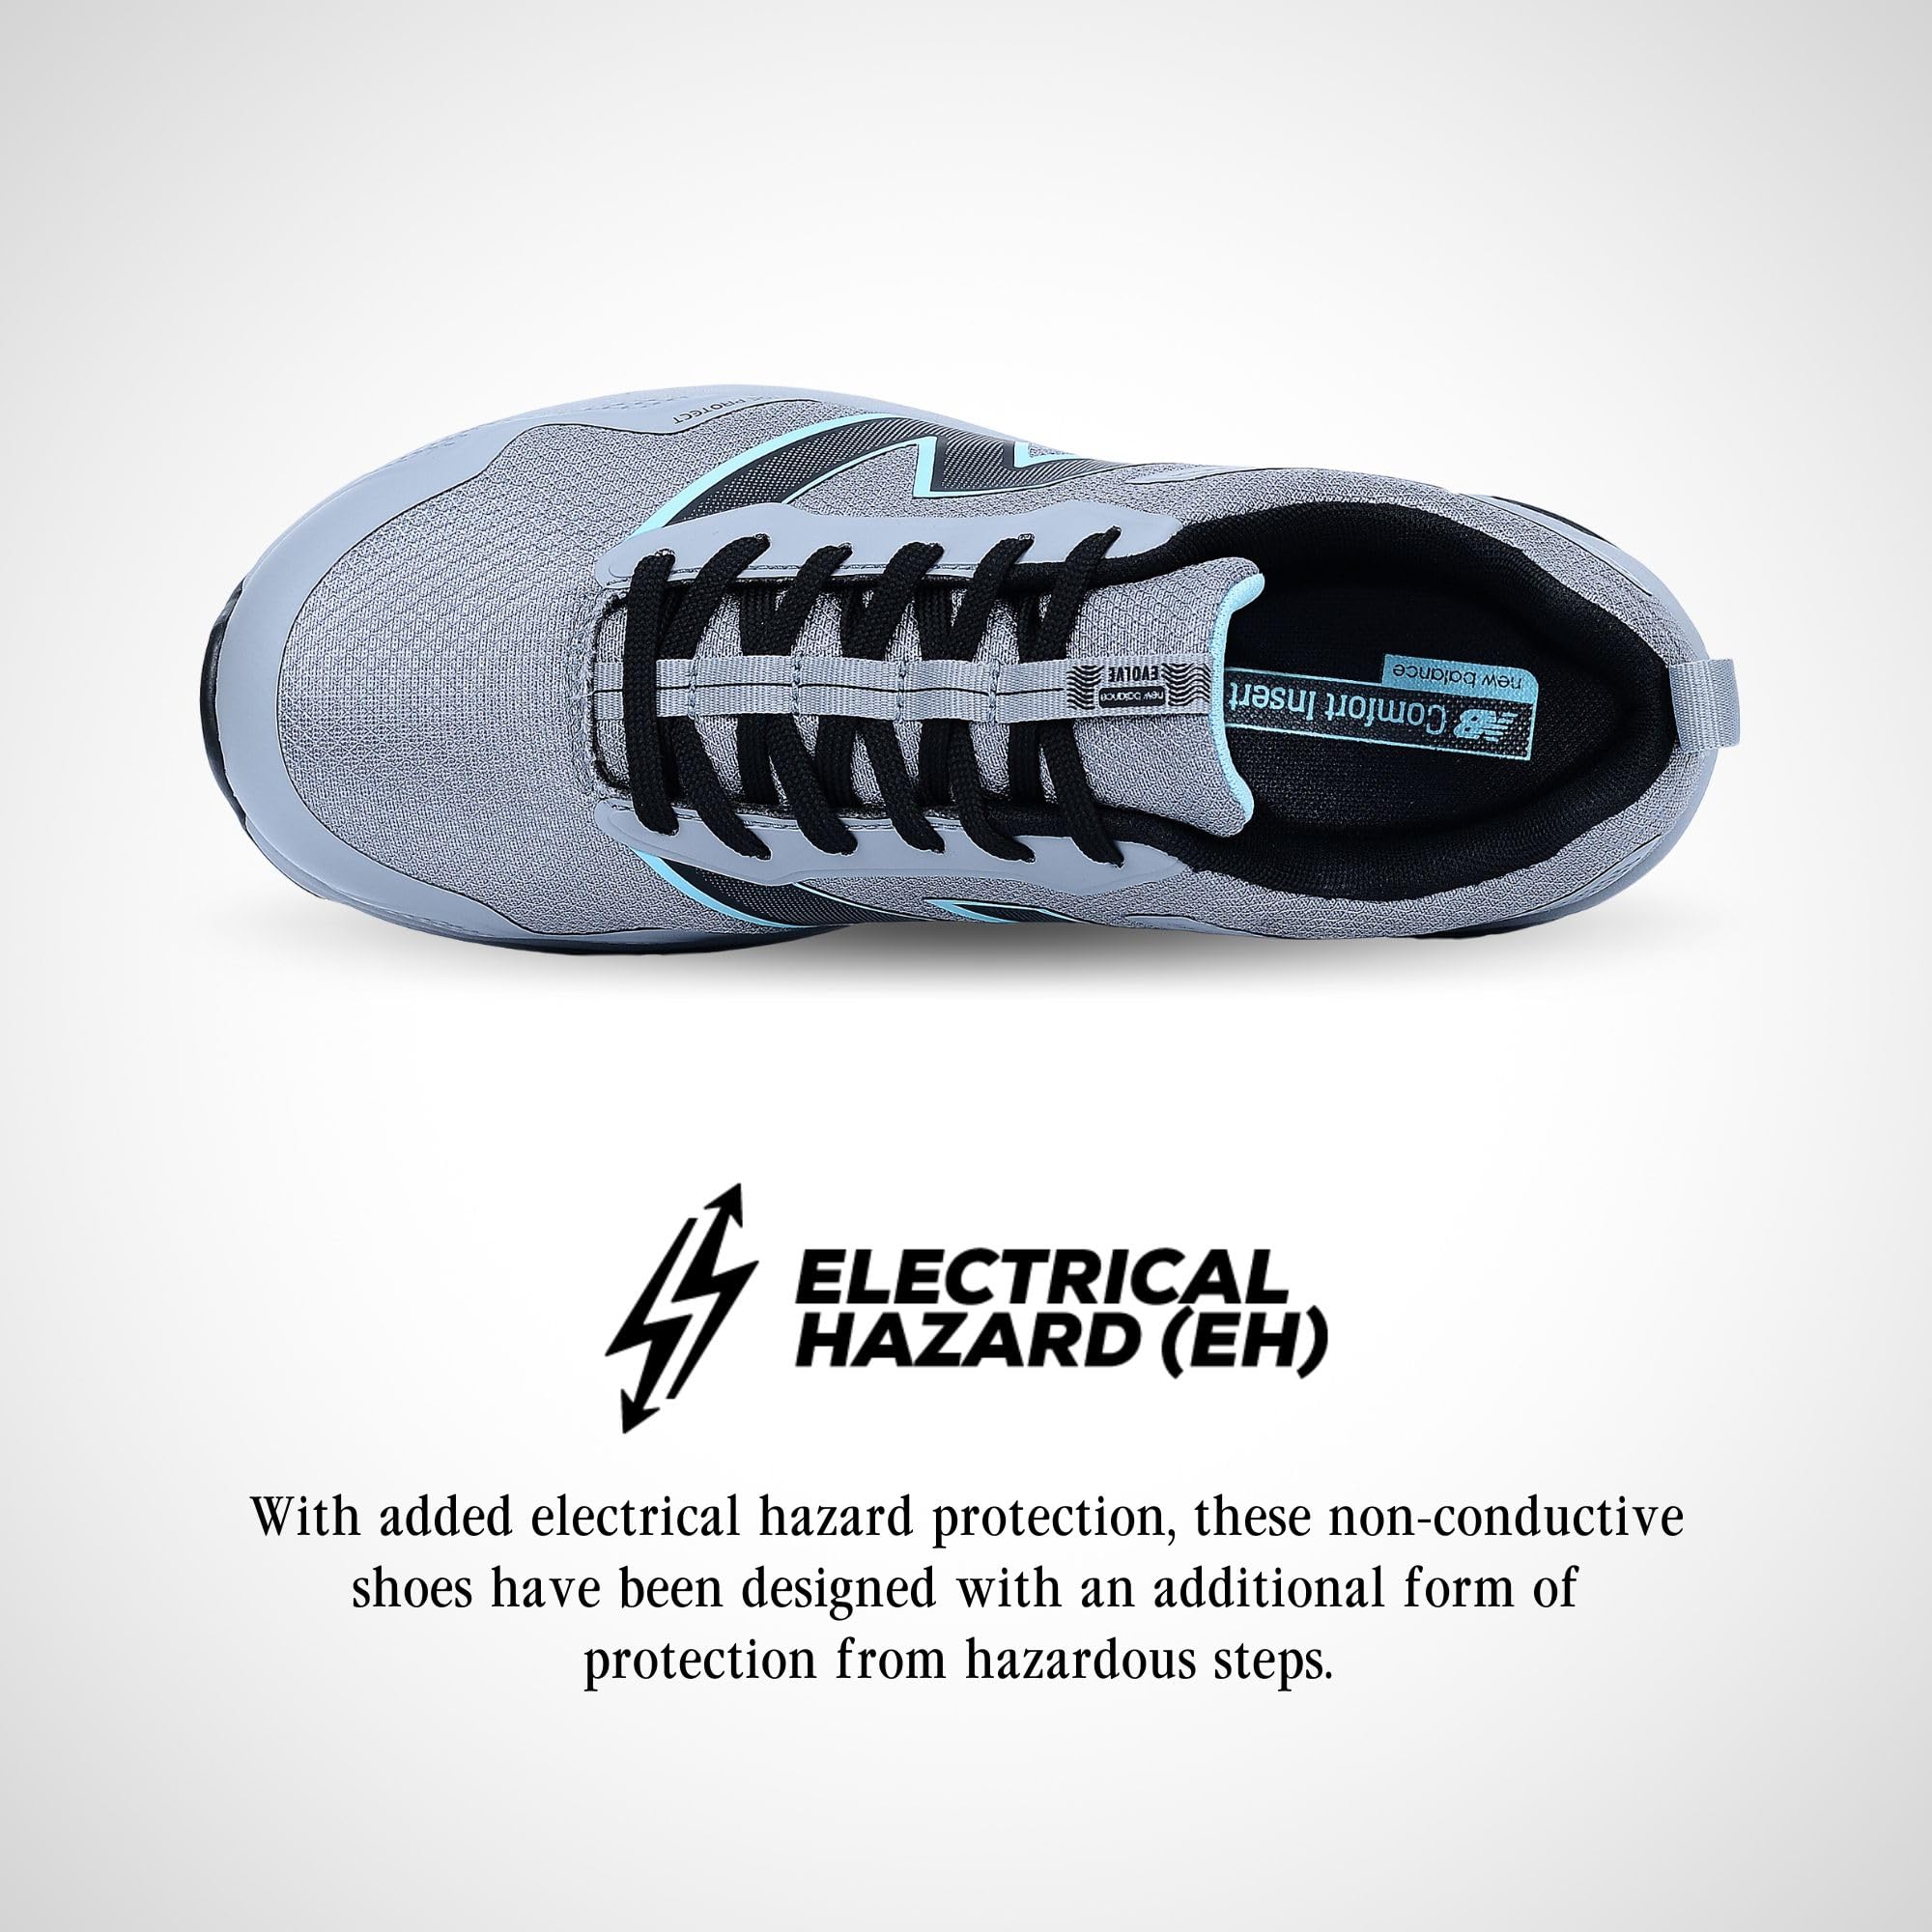 New Balance Women's Aluminum Toe Evolve Industrial Shoe, Grey/Beach, 9